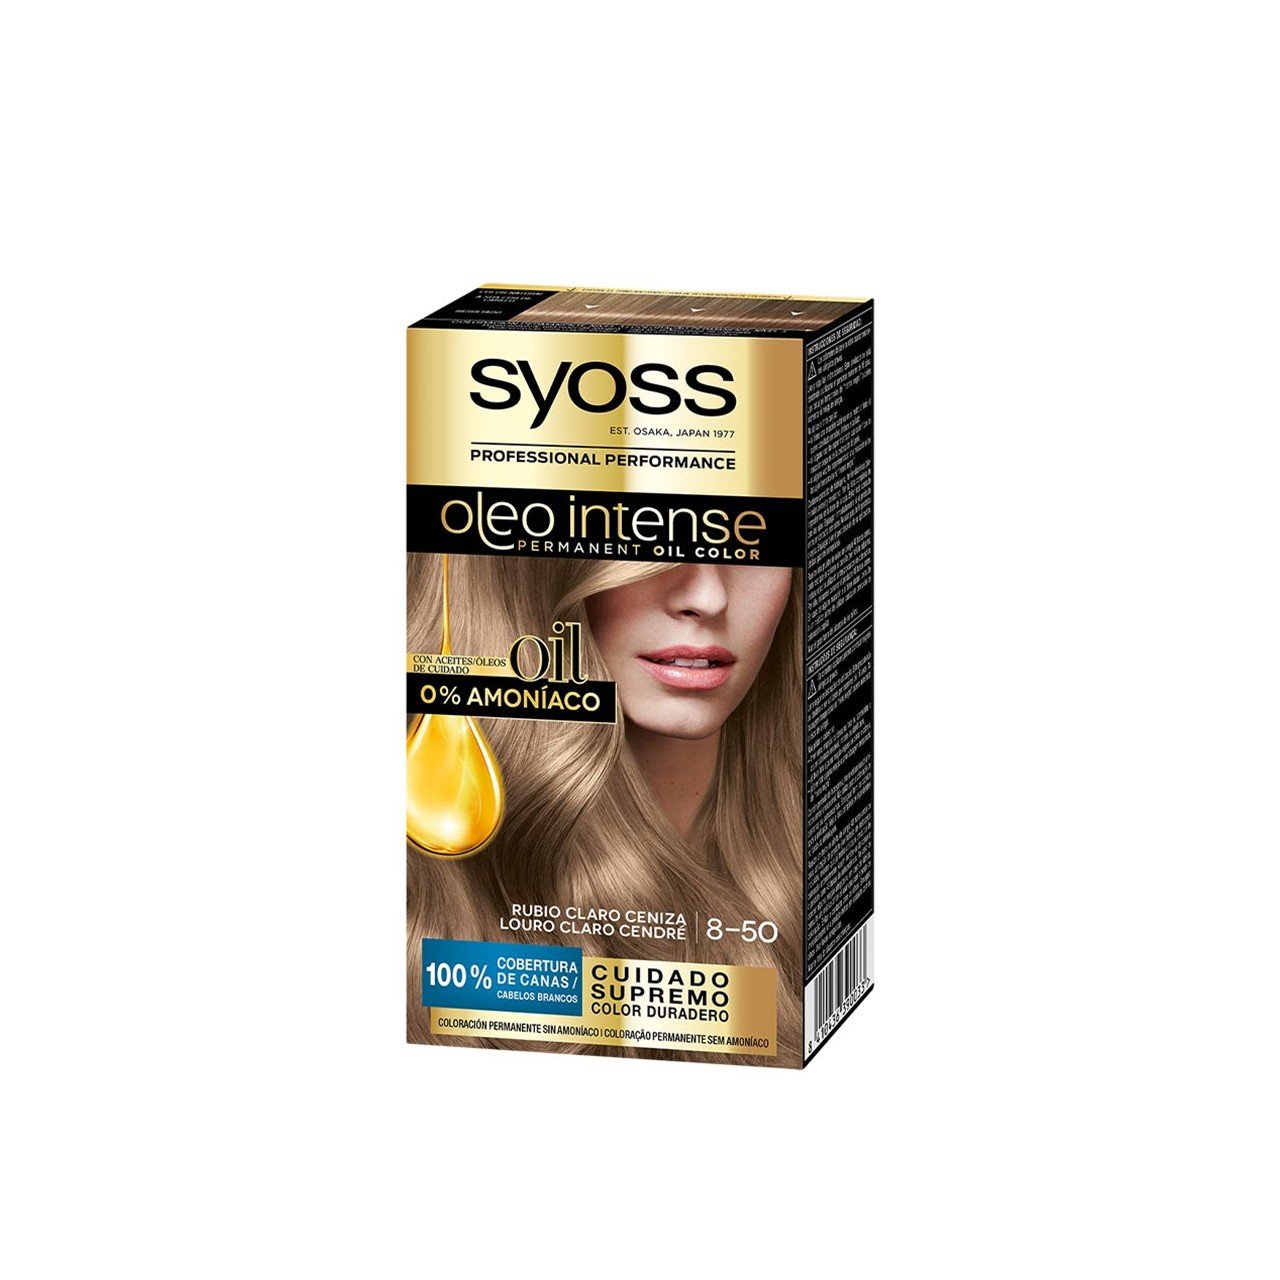 Syoss Oleo Intense Permanent Oil Color 8-50 Ashy Blonde Permanent Hair Dye